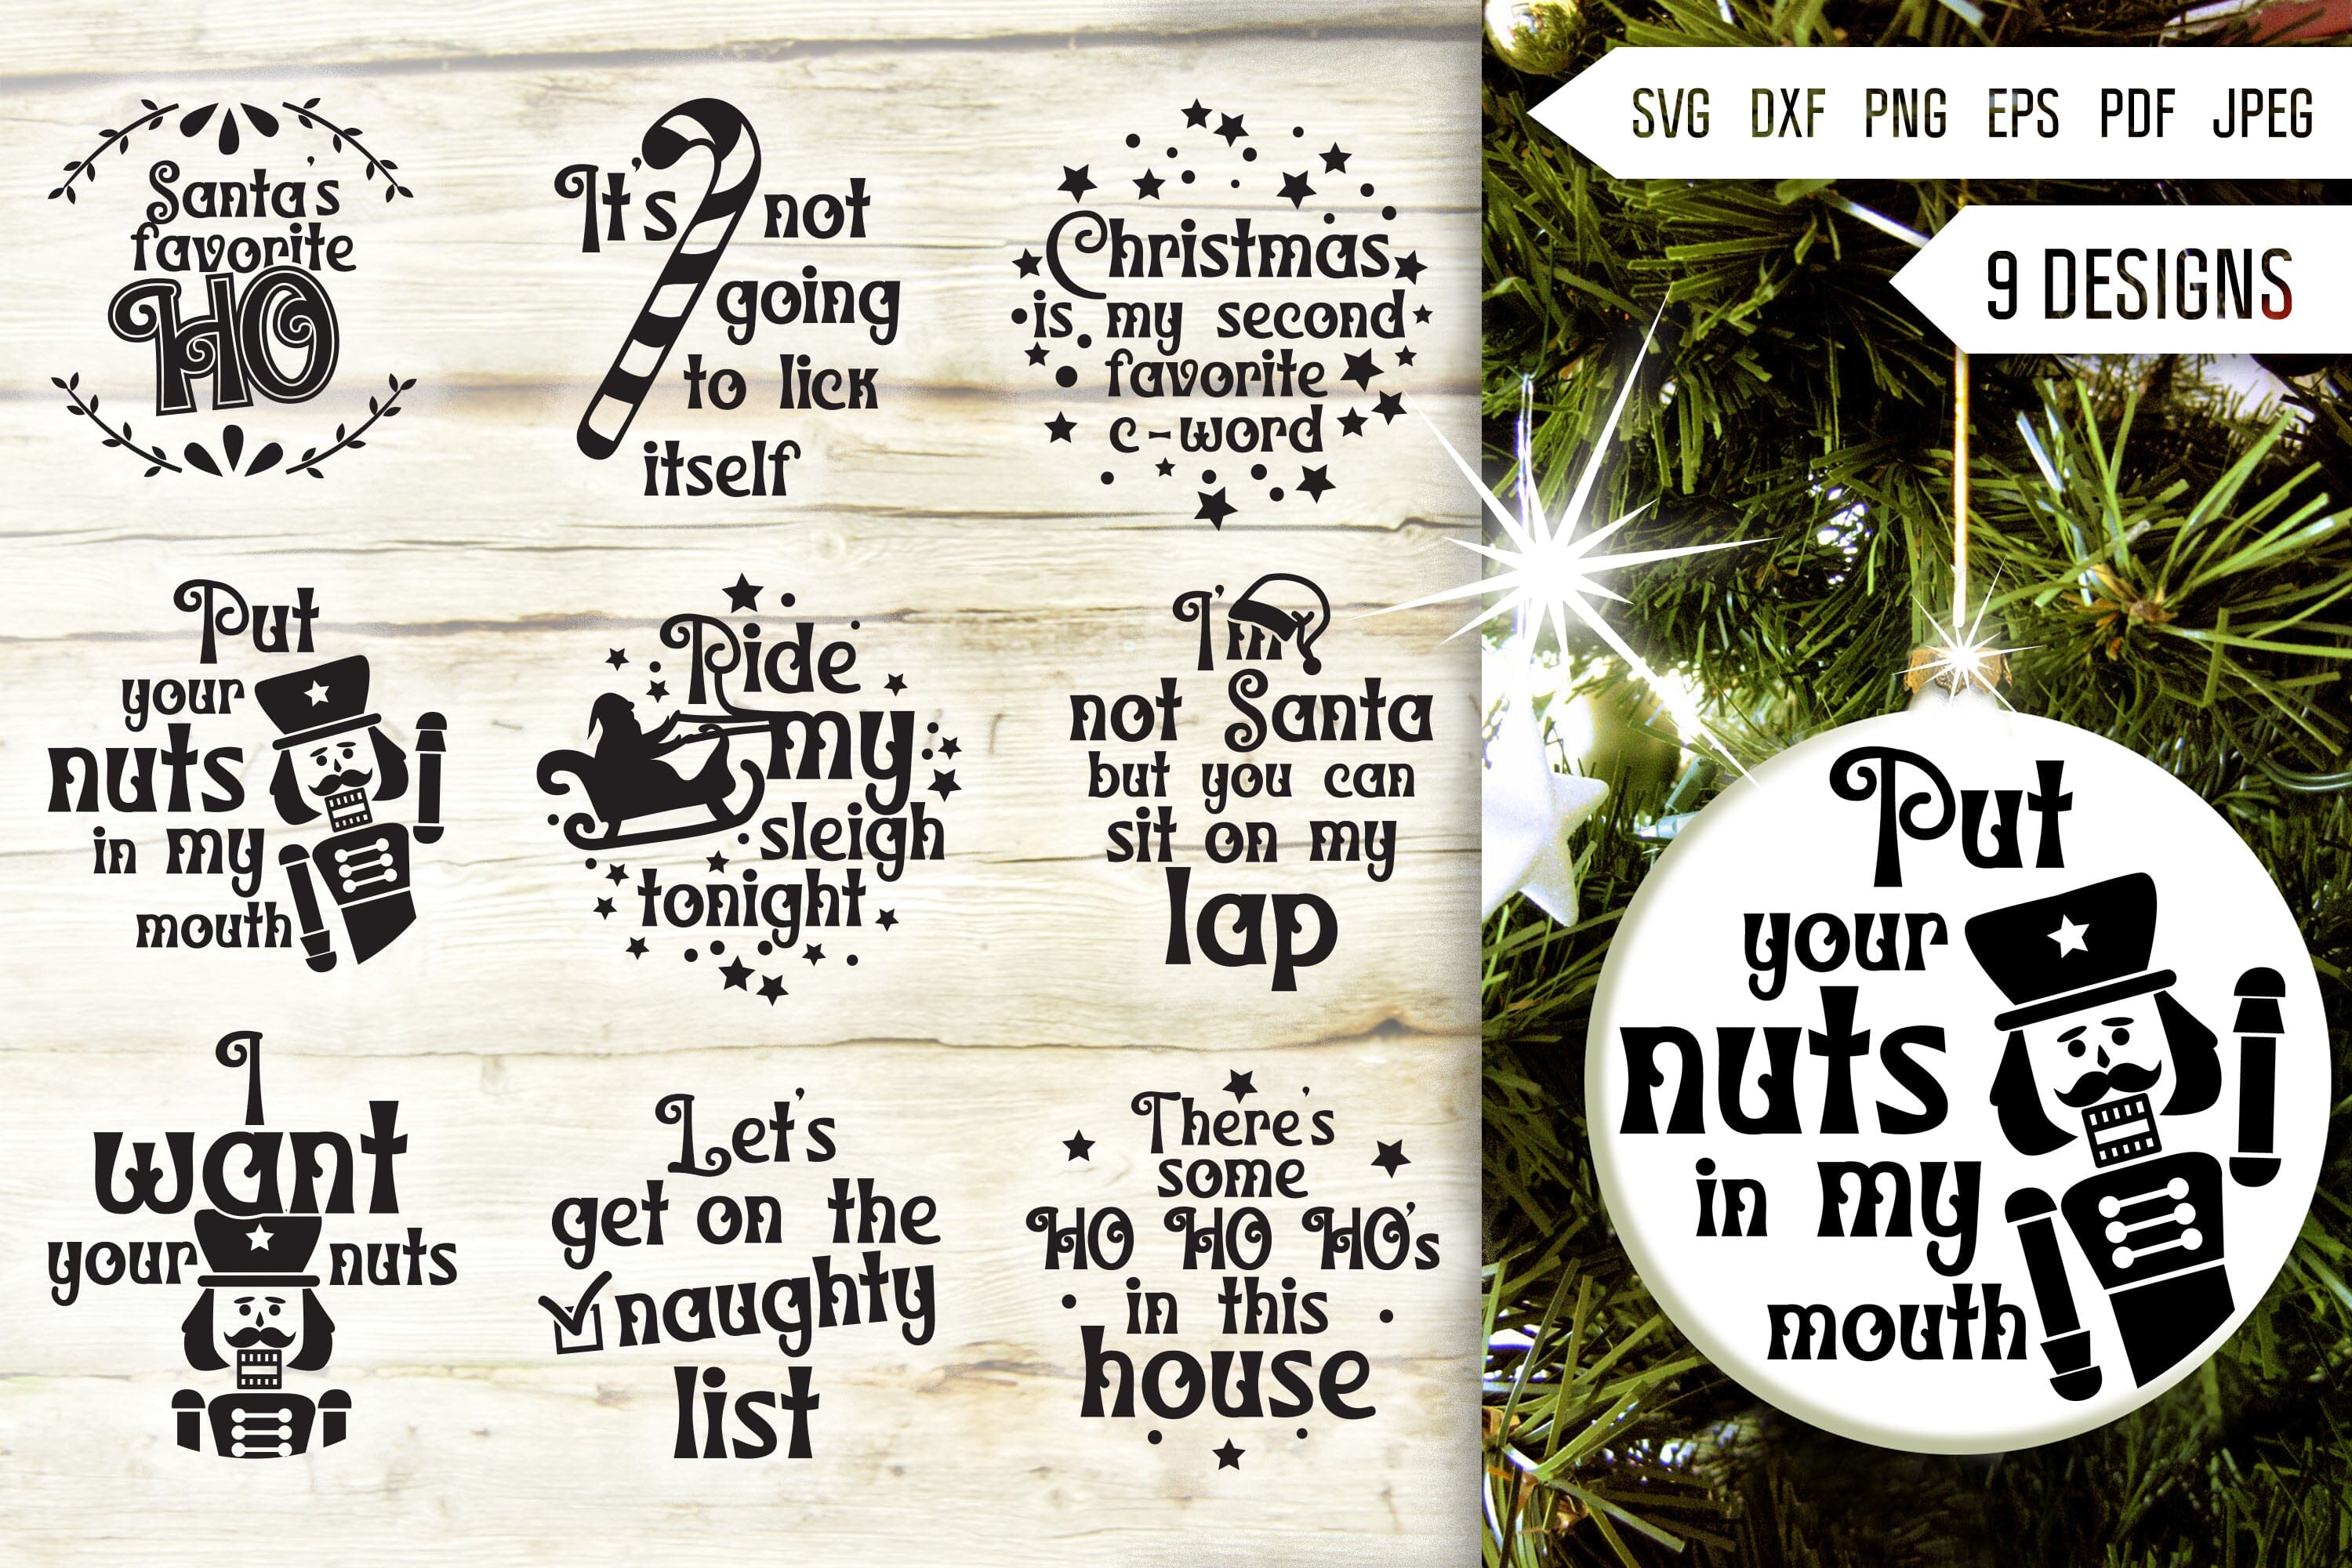 Santa's Favorite Ho Funny Christmas SVG File